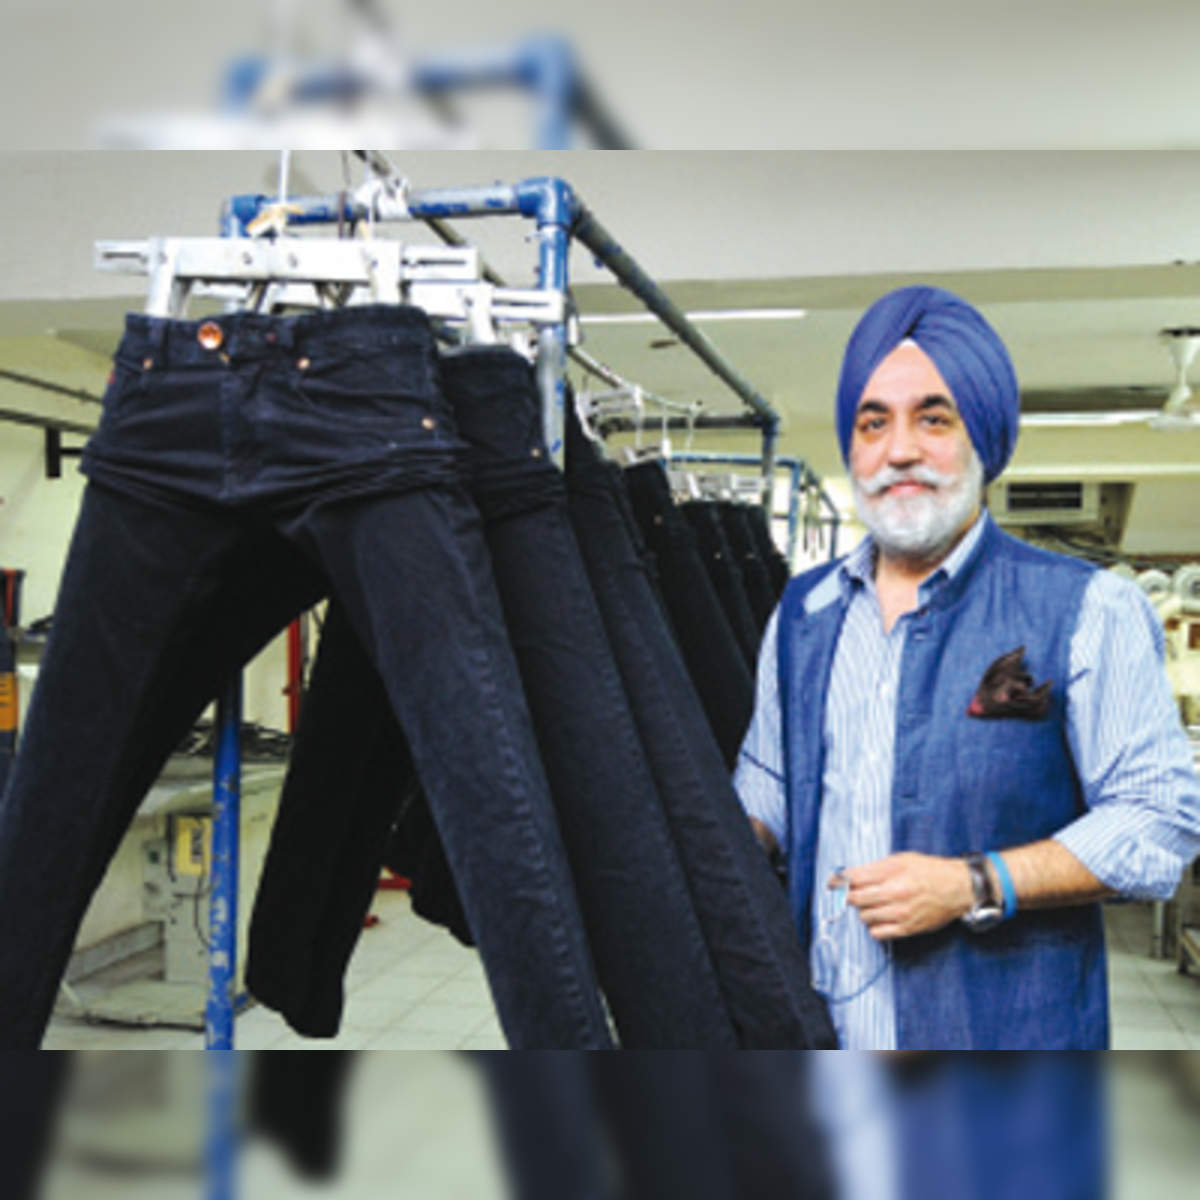 Top Denim Jacket Manufacturers in Ludhiana - डेनिम जैकेट मनुफक्चरर्स,  लुधिअना - Justdial